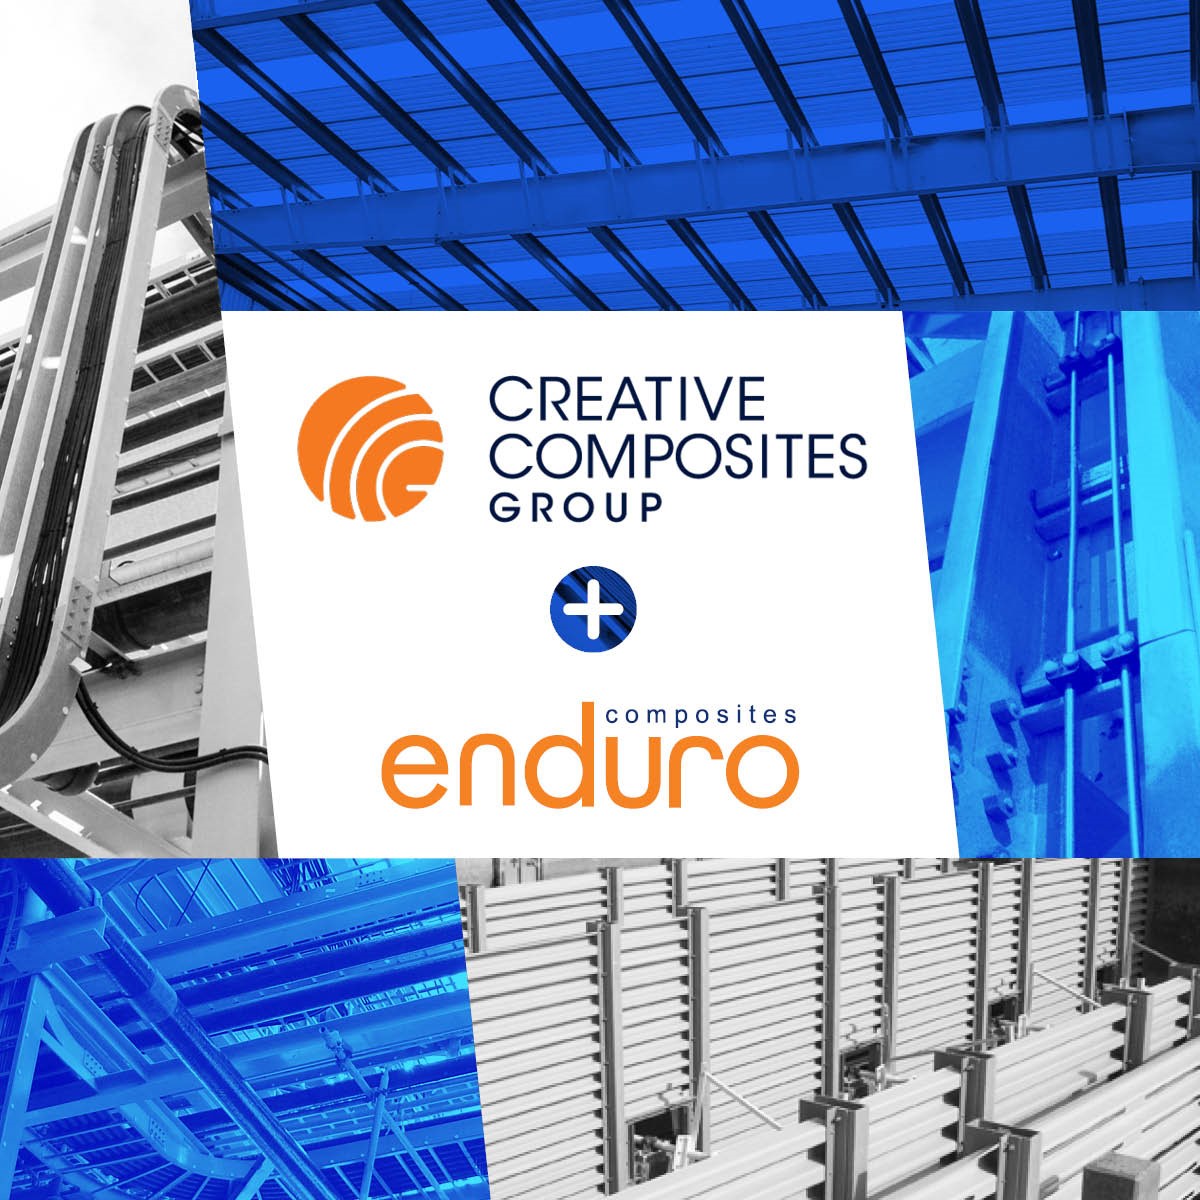 Creative Composites Group Acquires Enduro Composites, Expands Product Portfolio